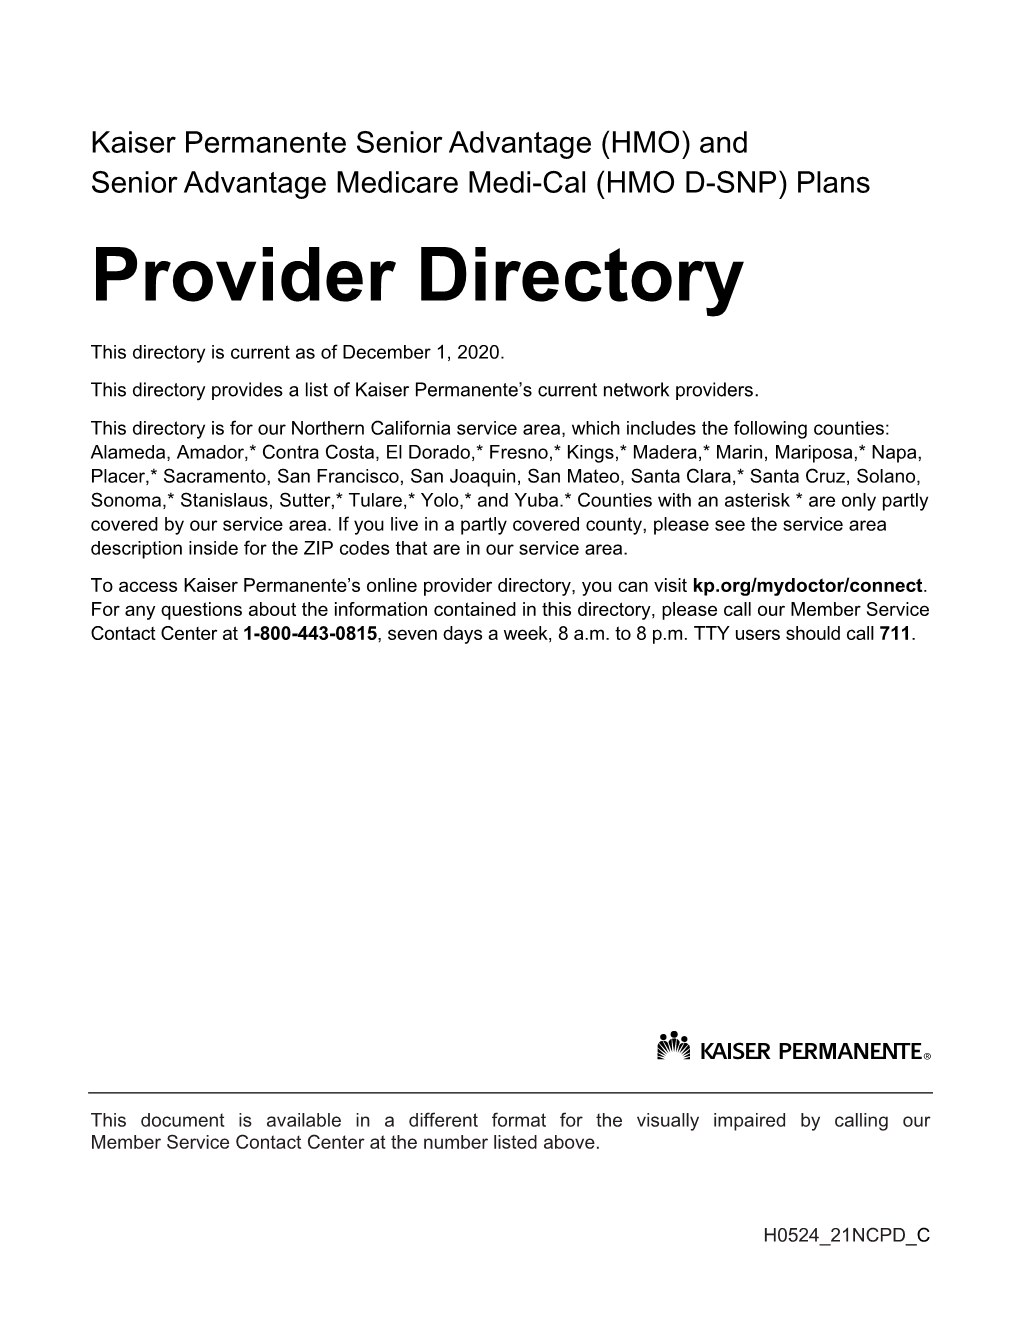 2021 Provider Directory Northern California